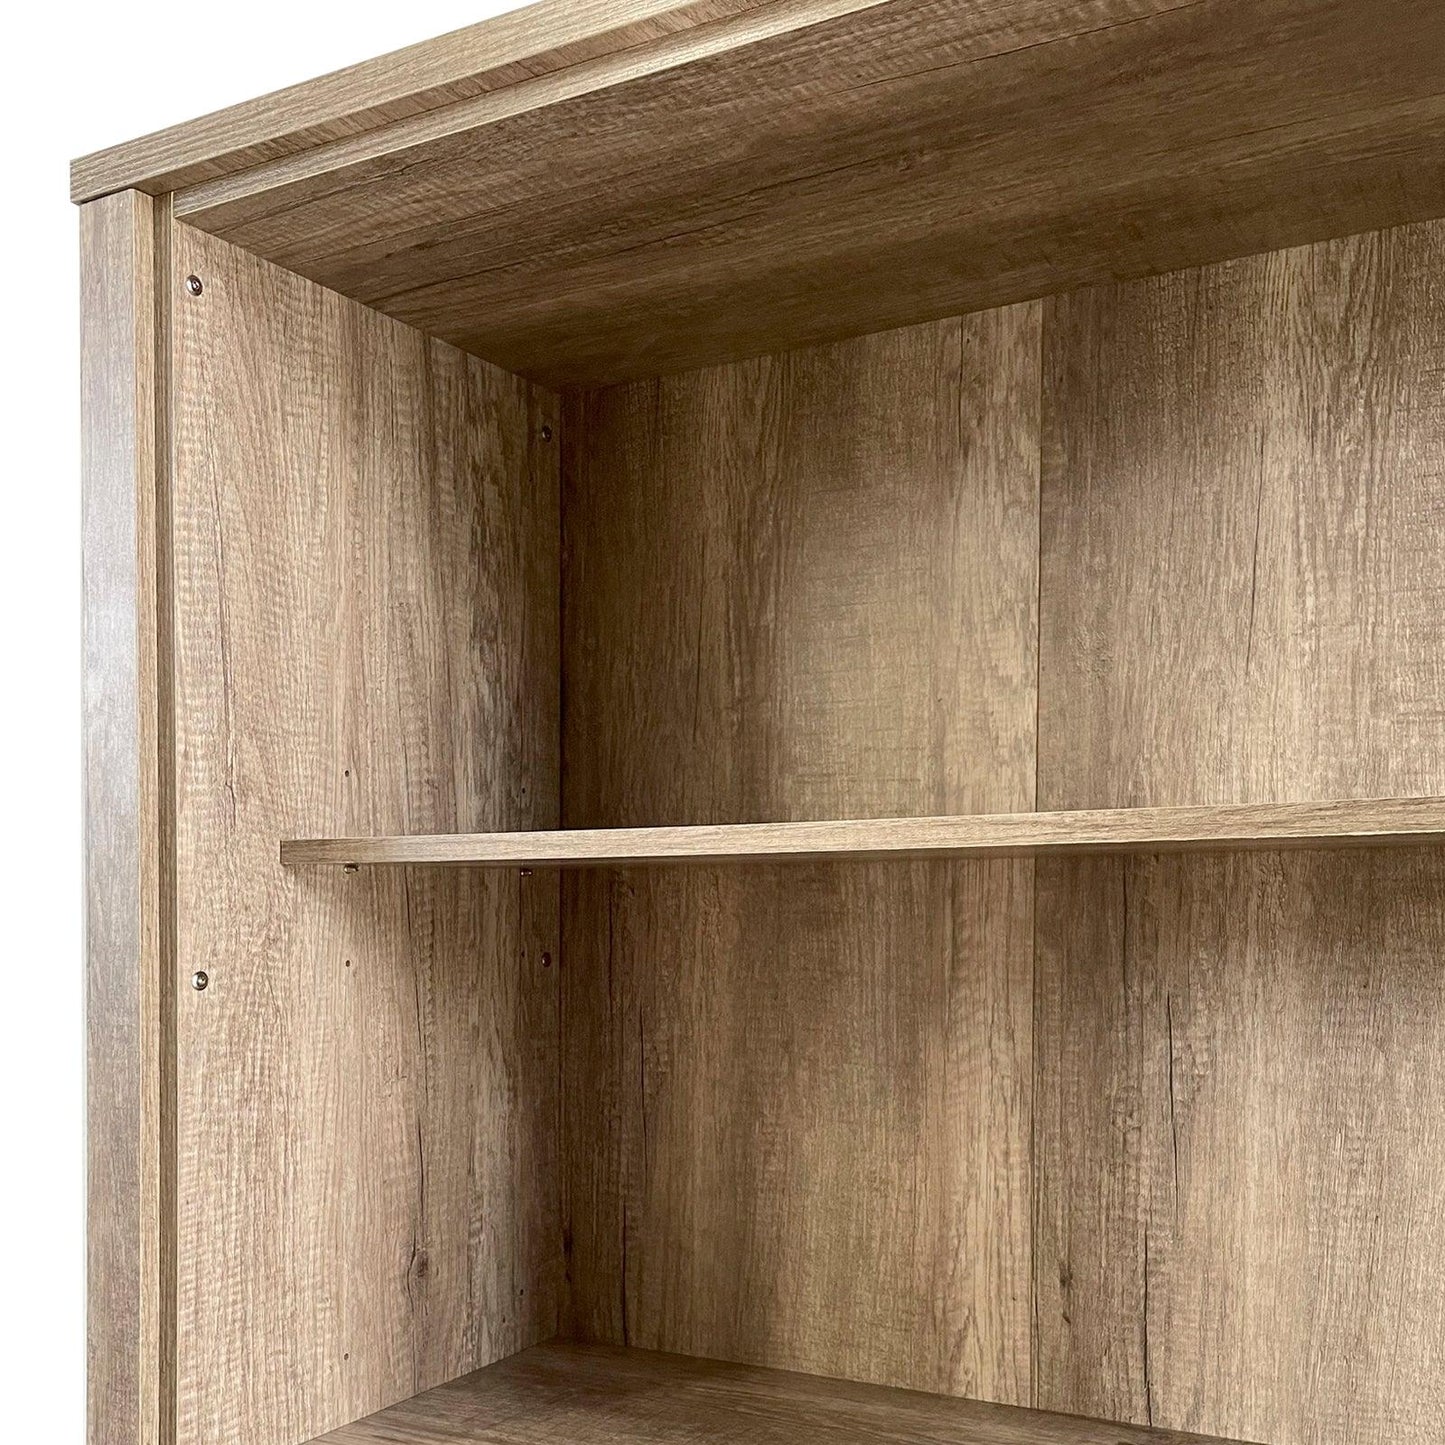 Display Shelf Book Case Stand Bookshelf Natural Wood like MDF in Oak Colour